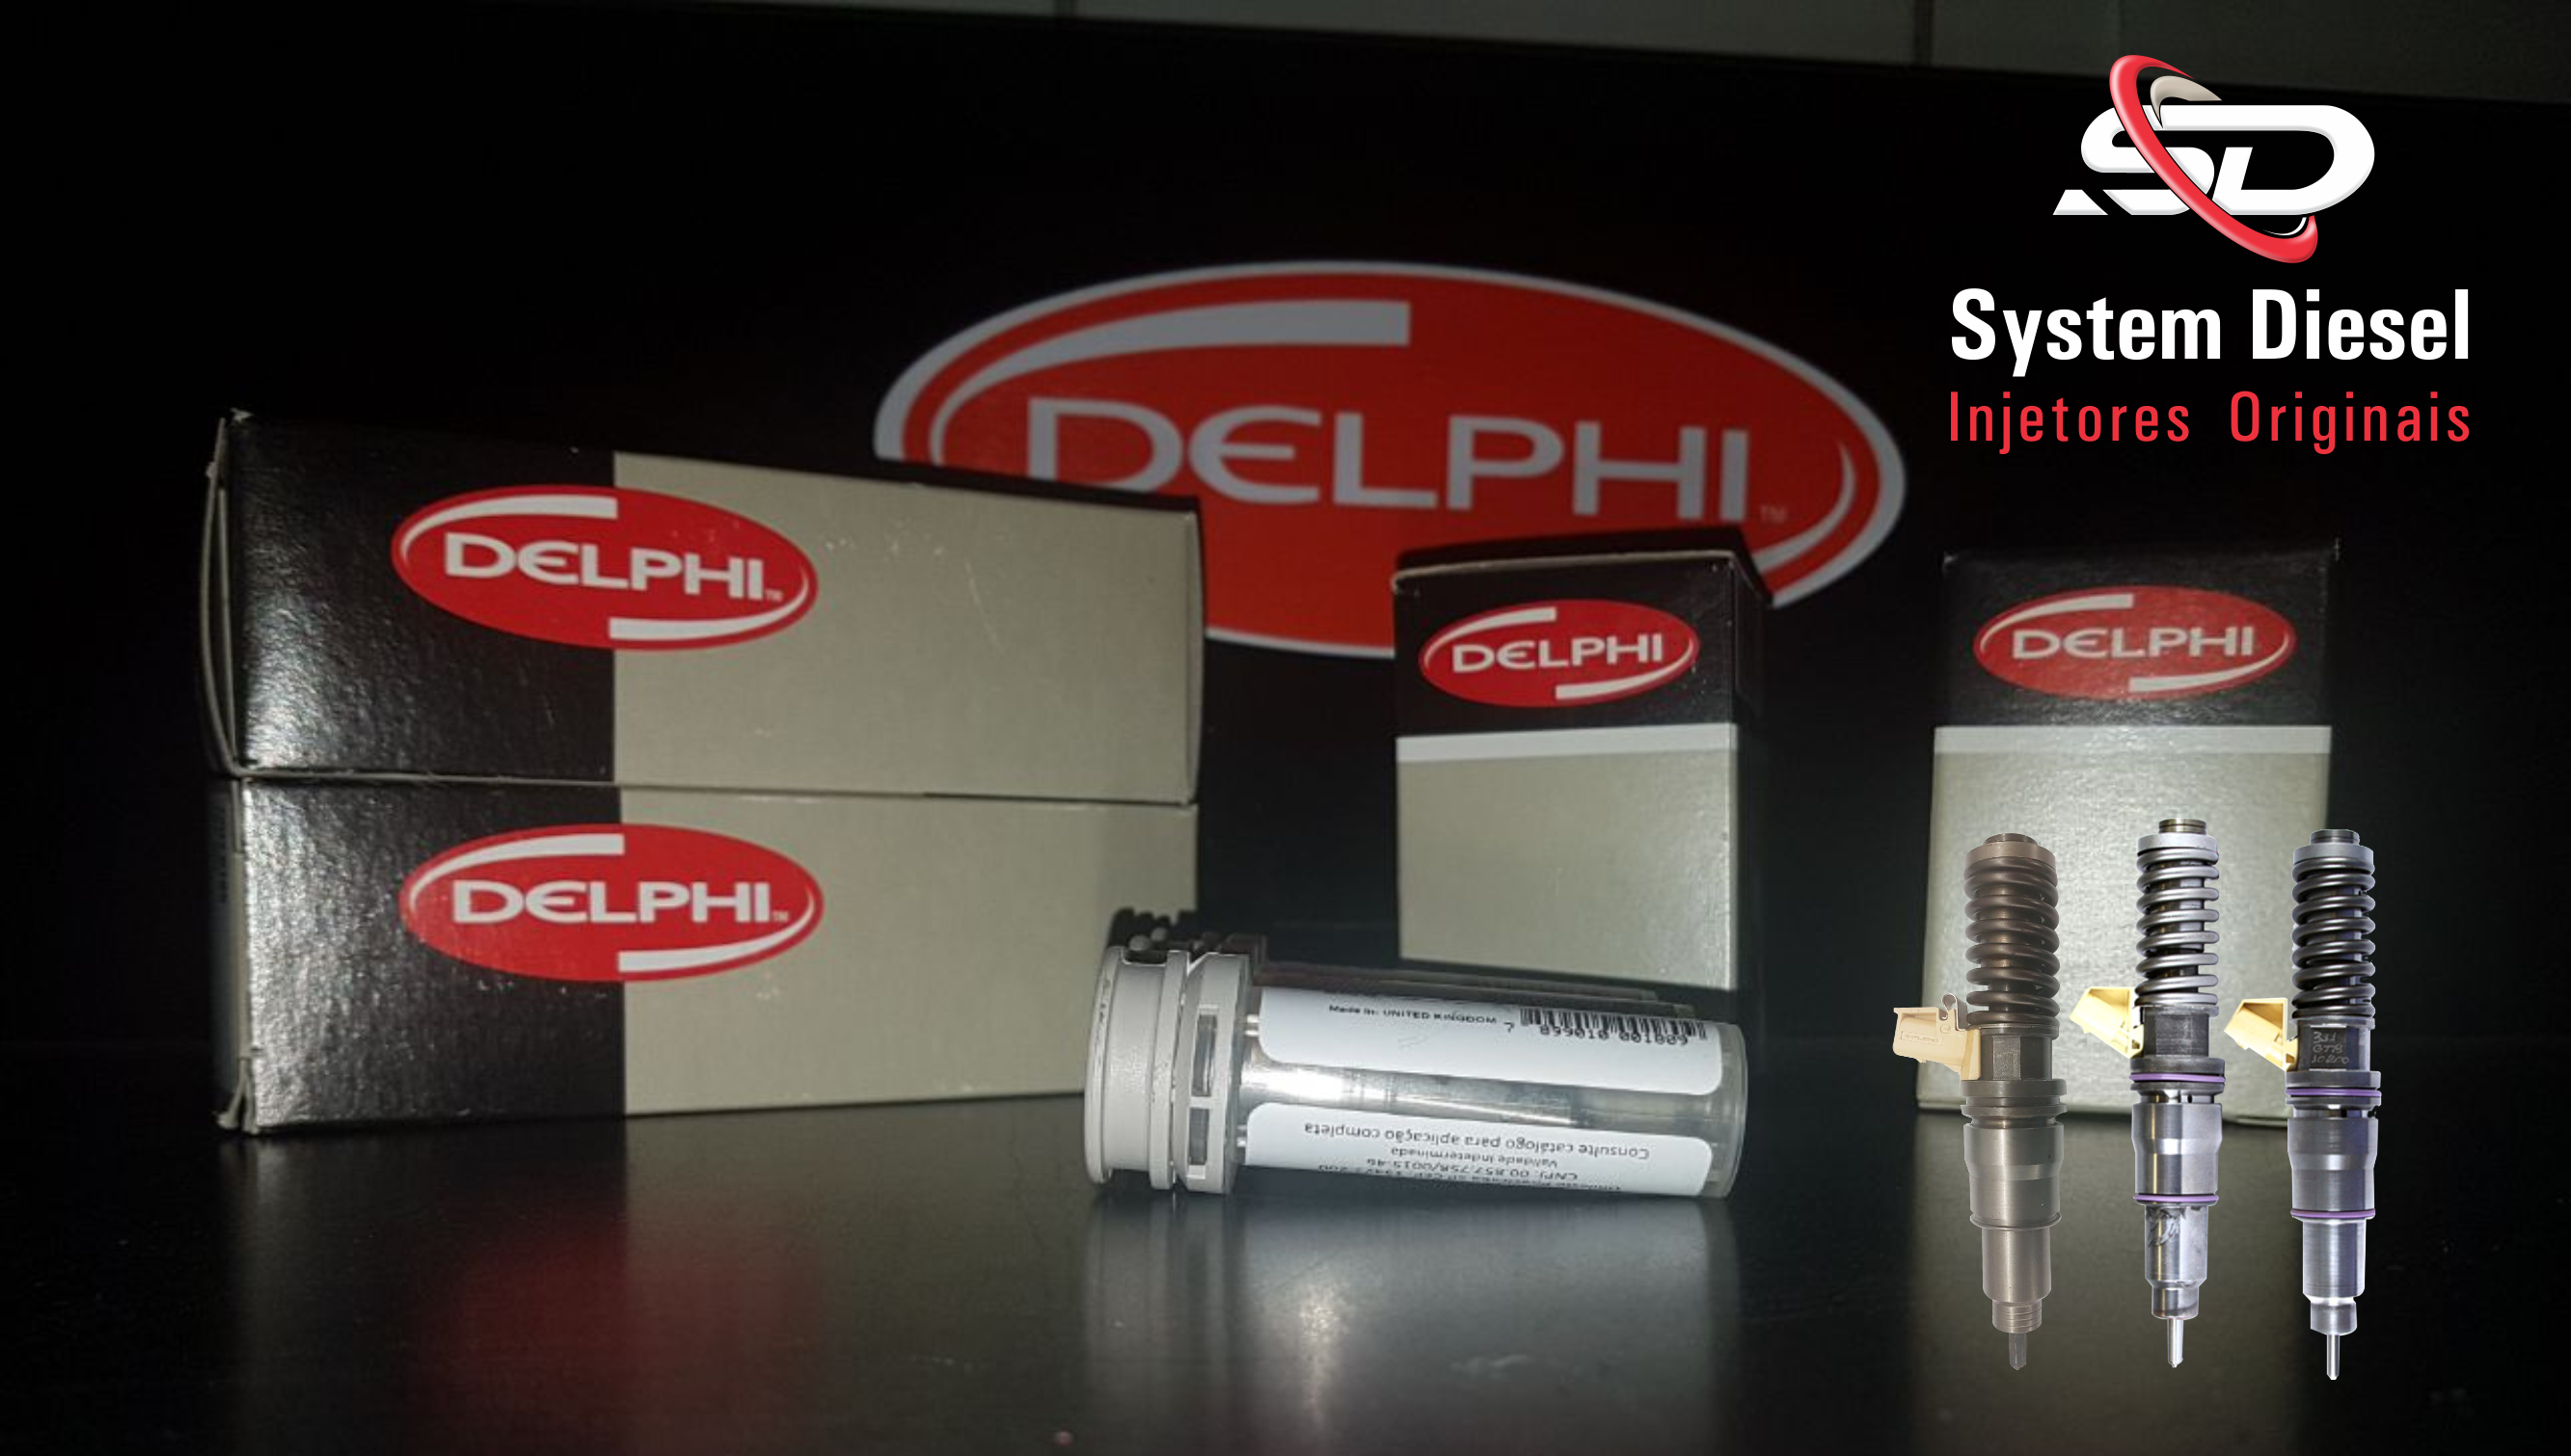 System diesel - Injetores Delphi